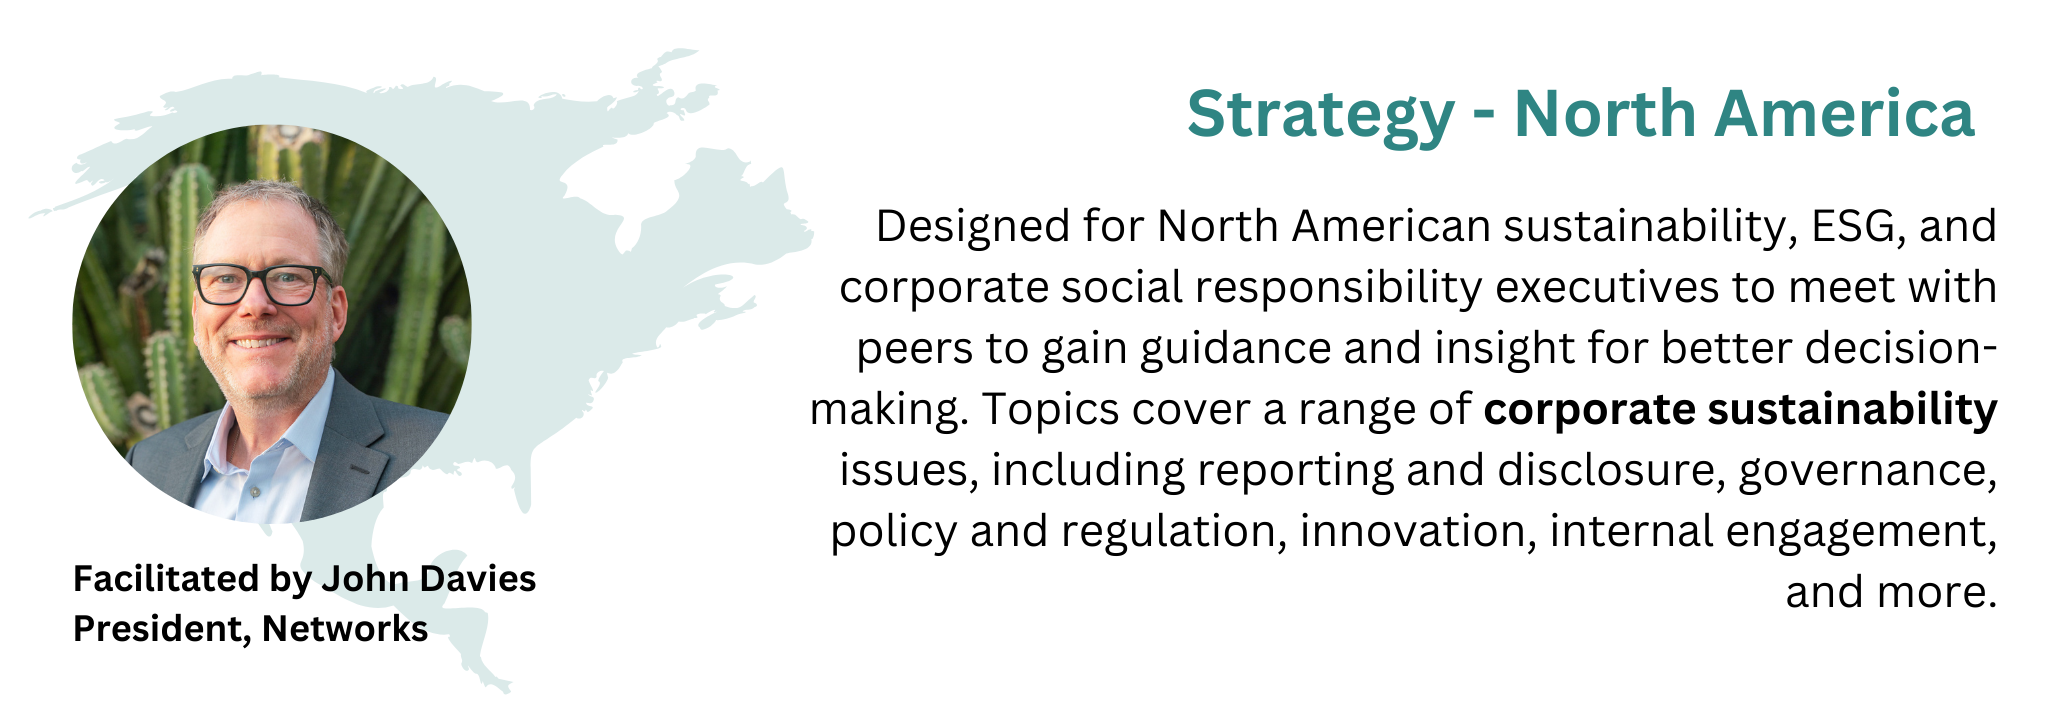 Strategy - North America